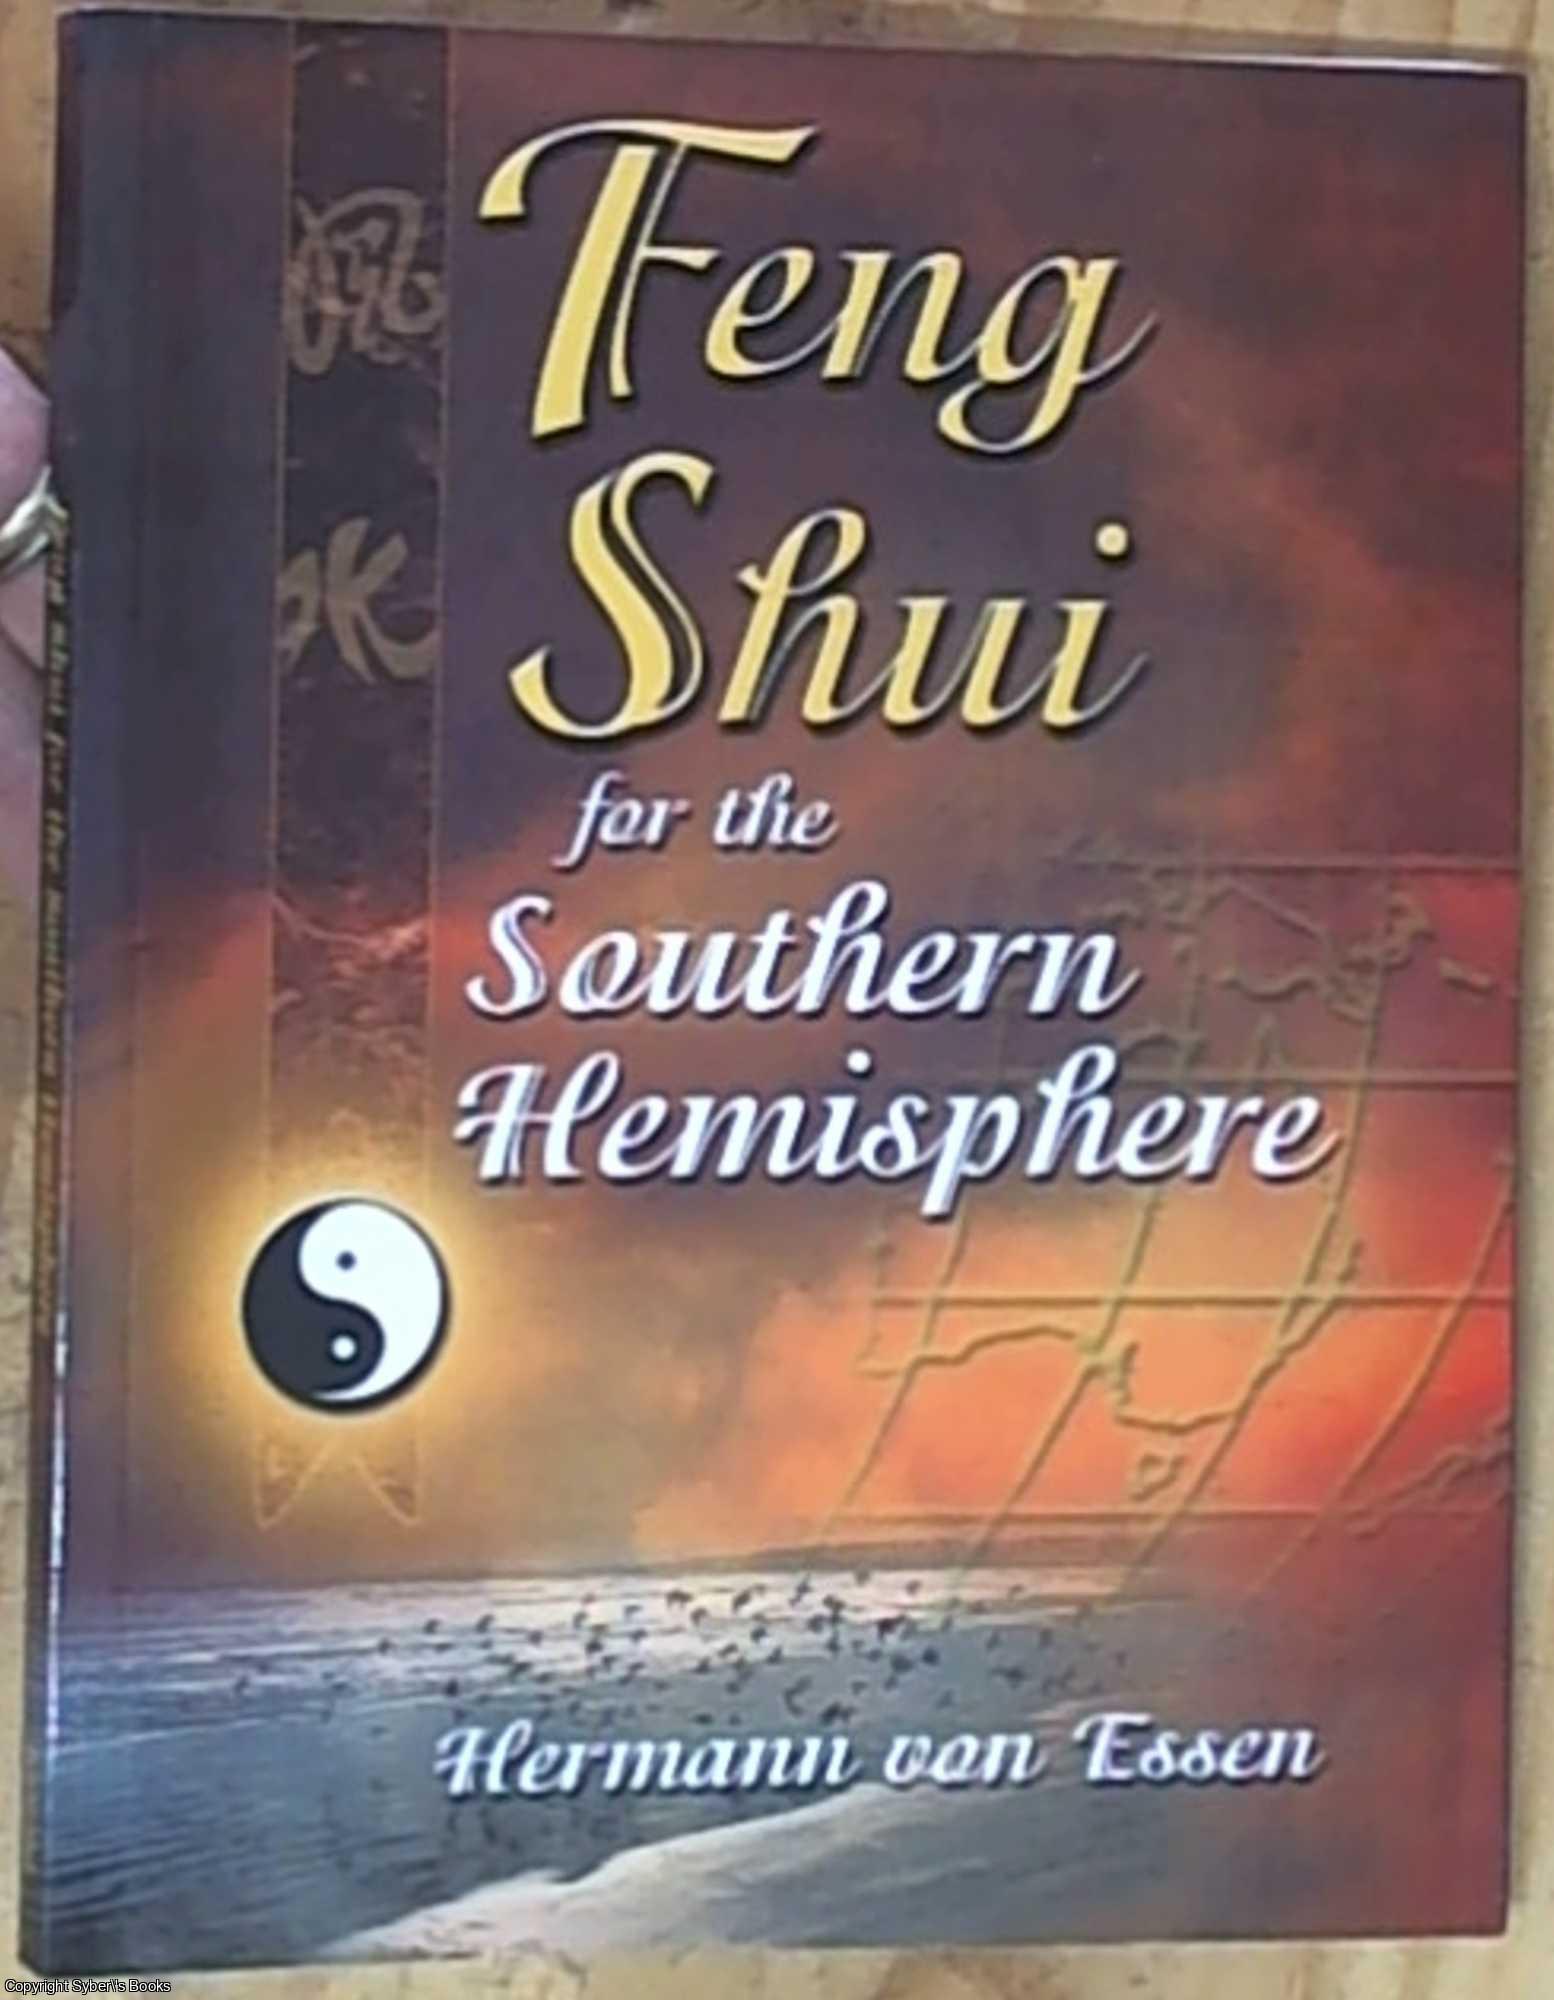 Von Essen, Hermann - Feng Shui for the Southern Hemisphere